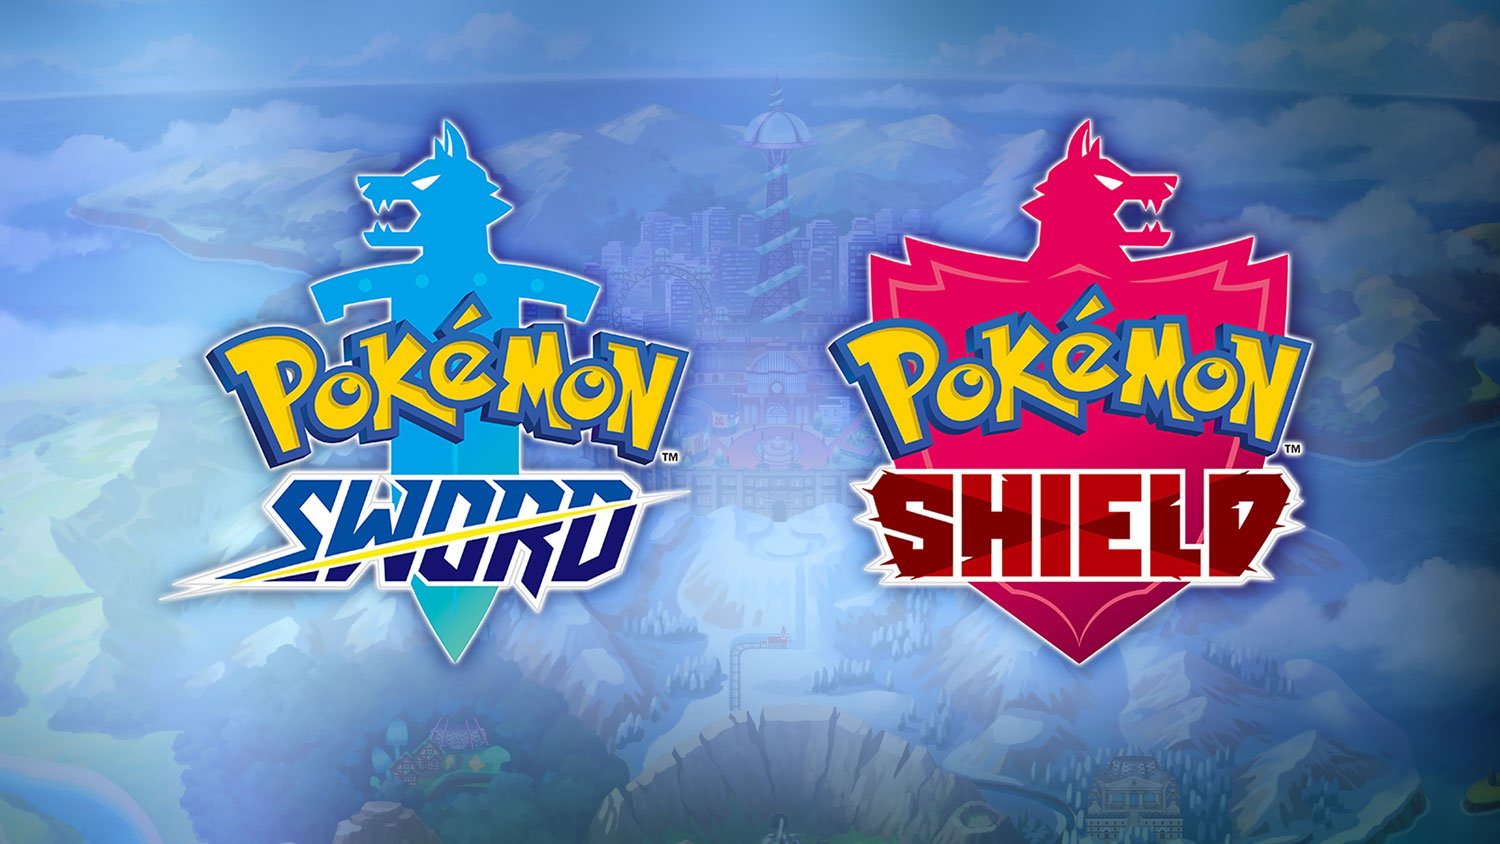 Pokémon Sword And Pokémon Shield Announced At Pokémon Direct